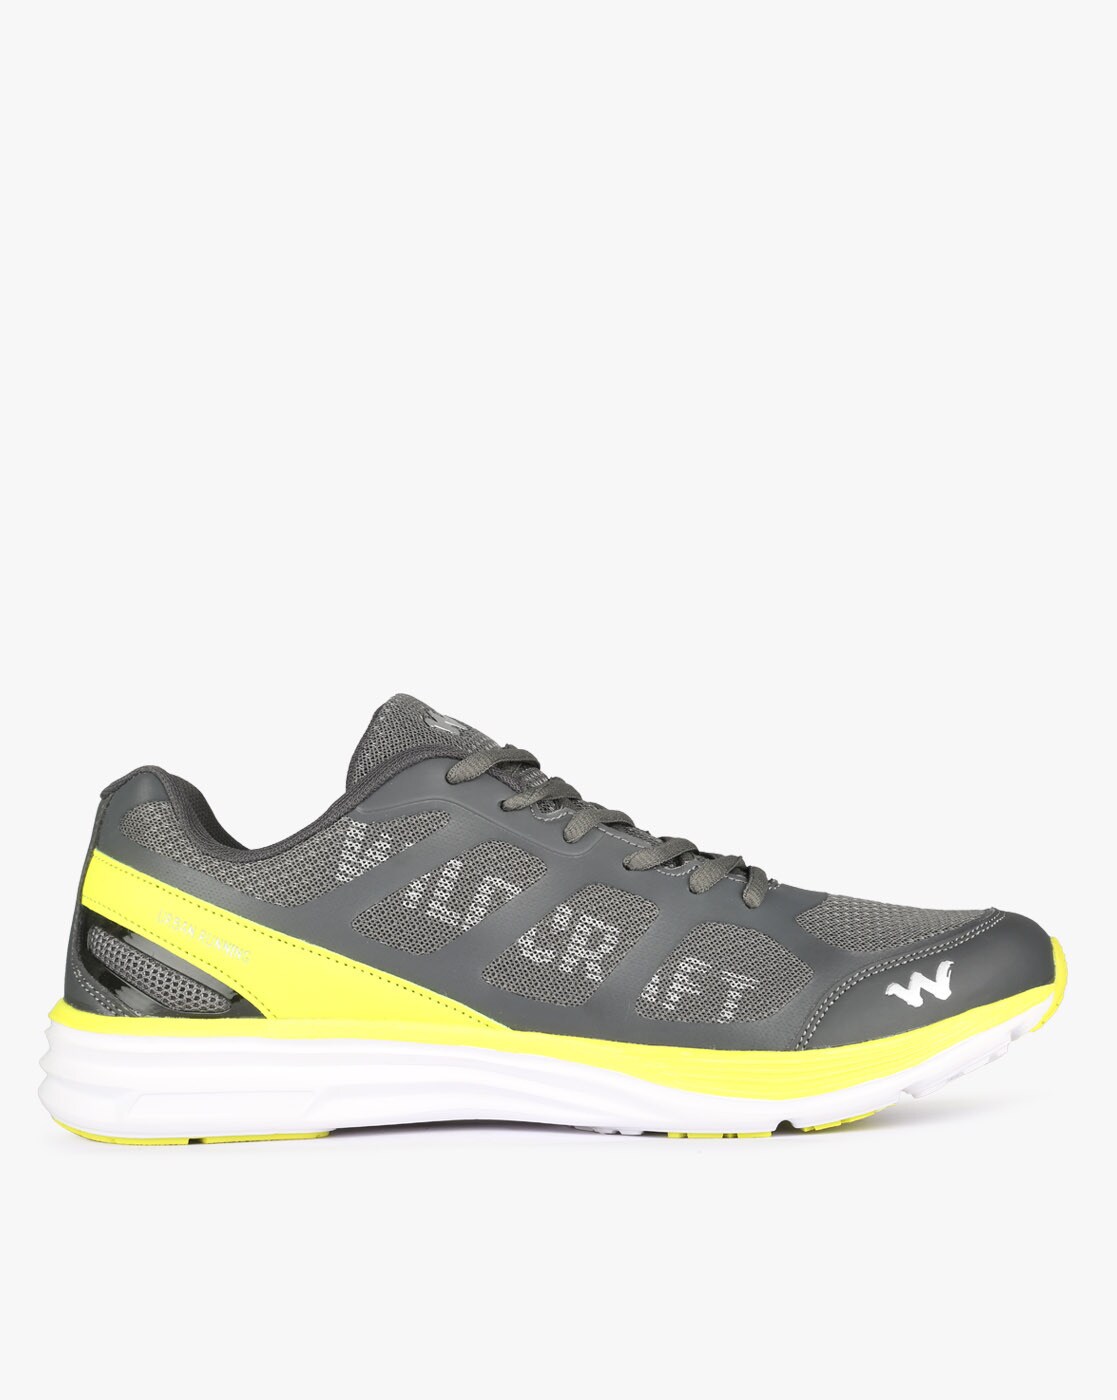 wildcraft sports shoes online